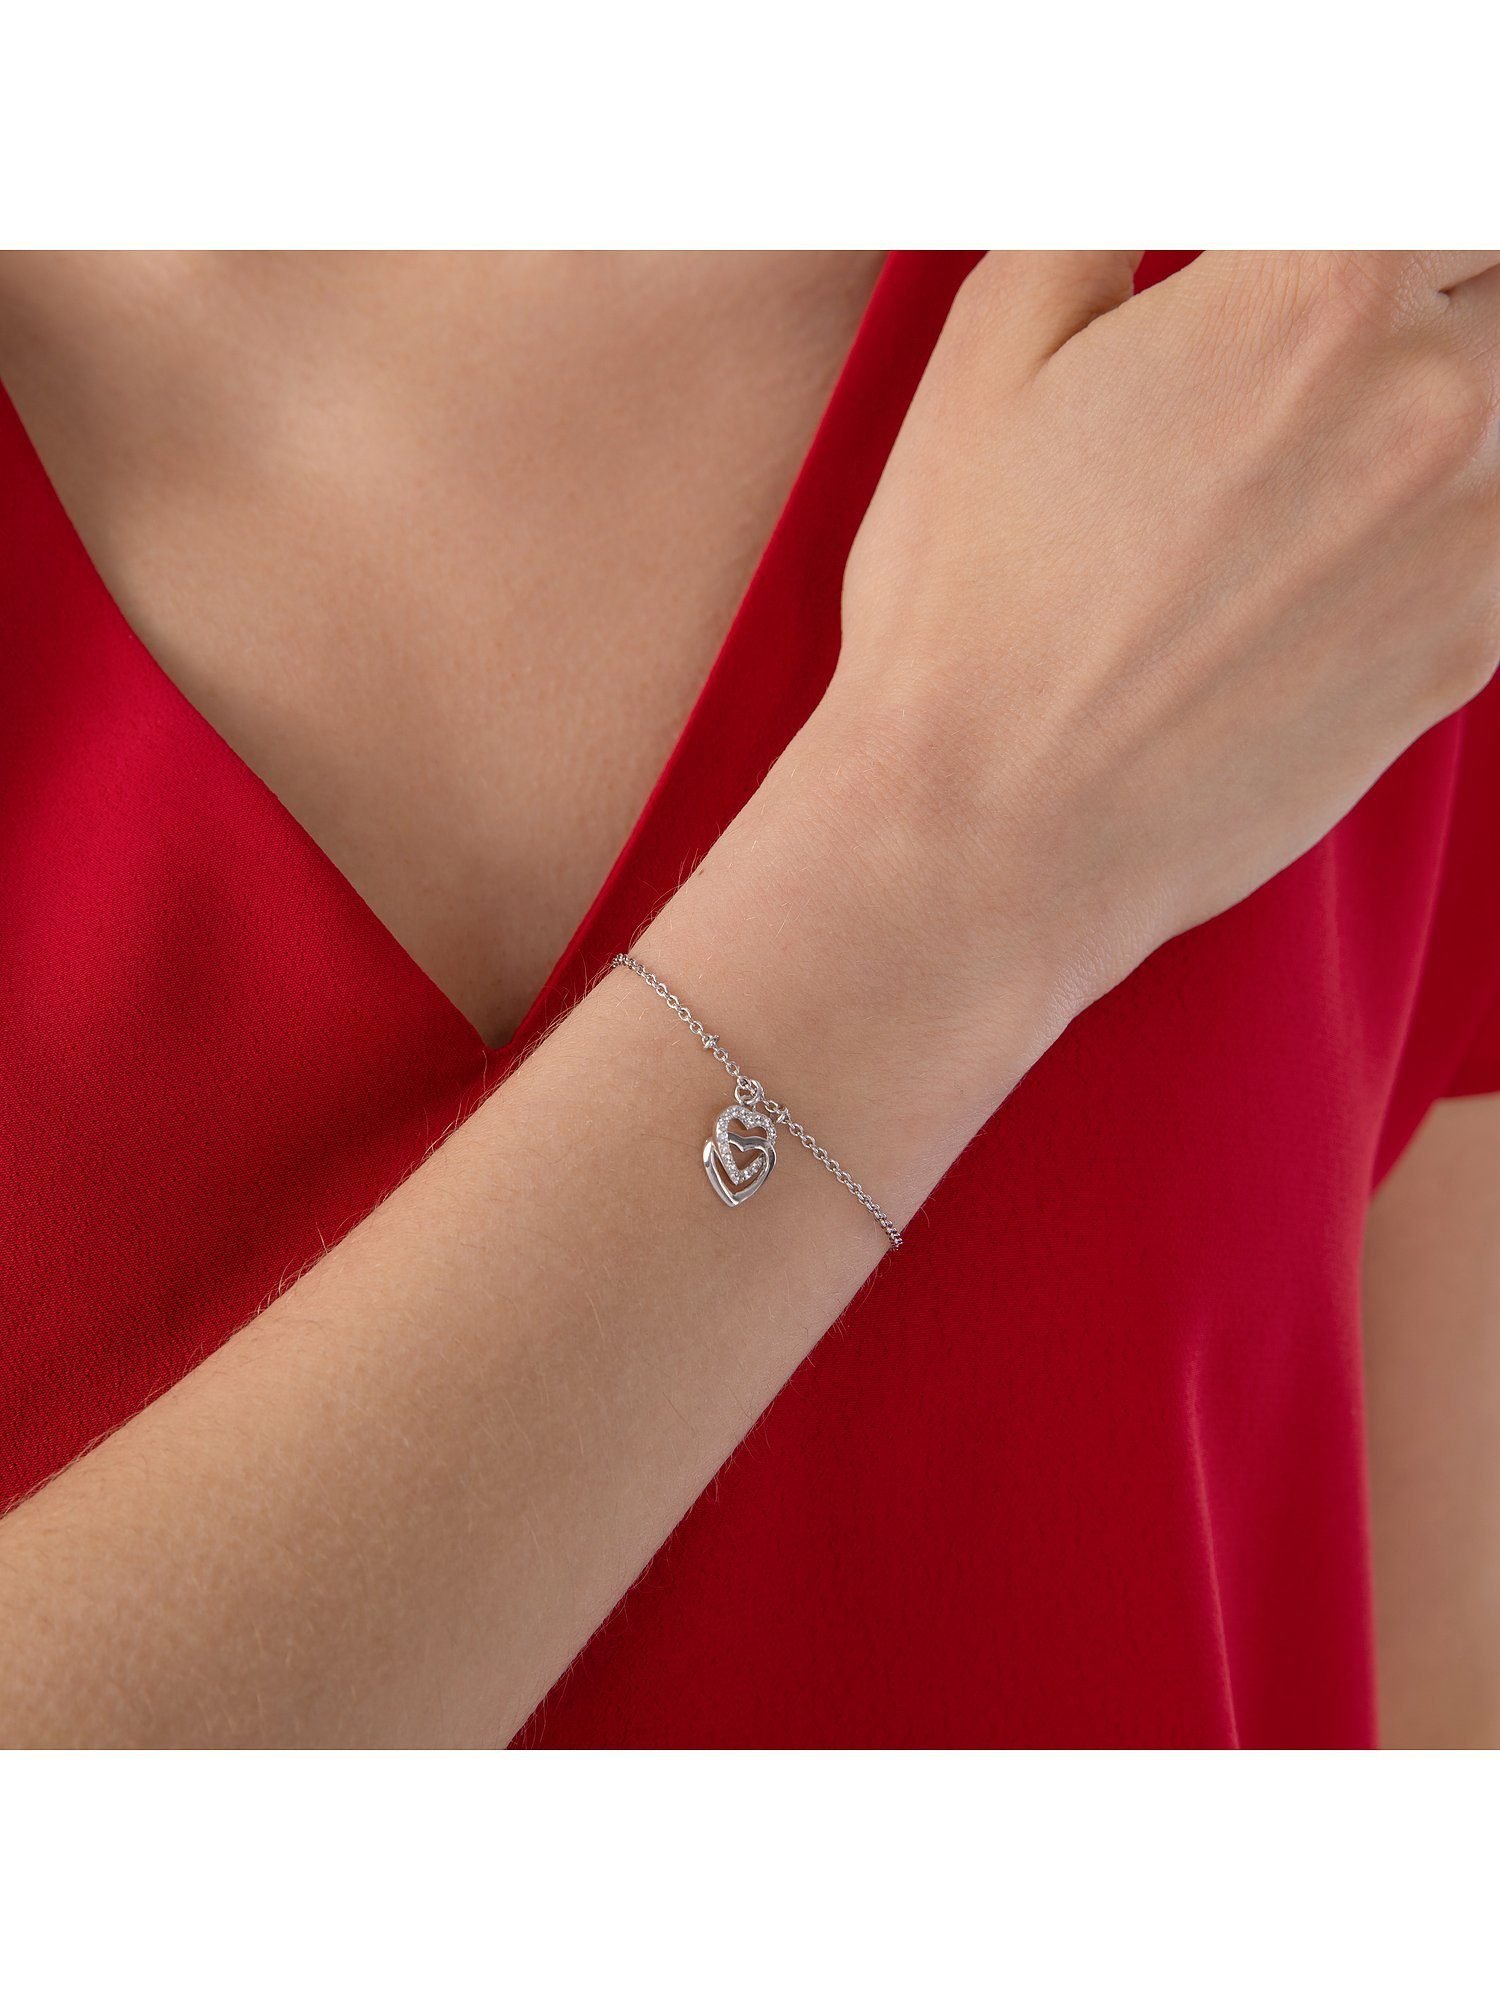 JETTE Armband JETTE 15 Zirkonia, modern Damen-Armband 925er Silber